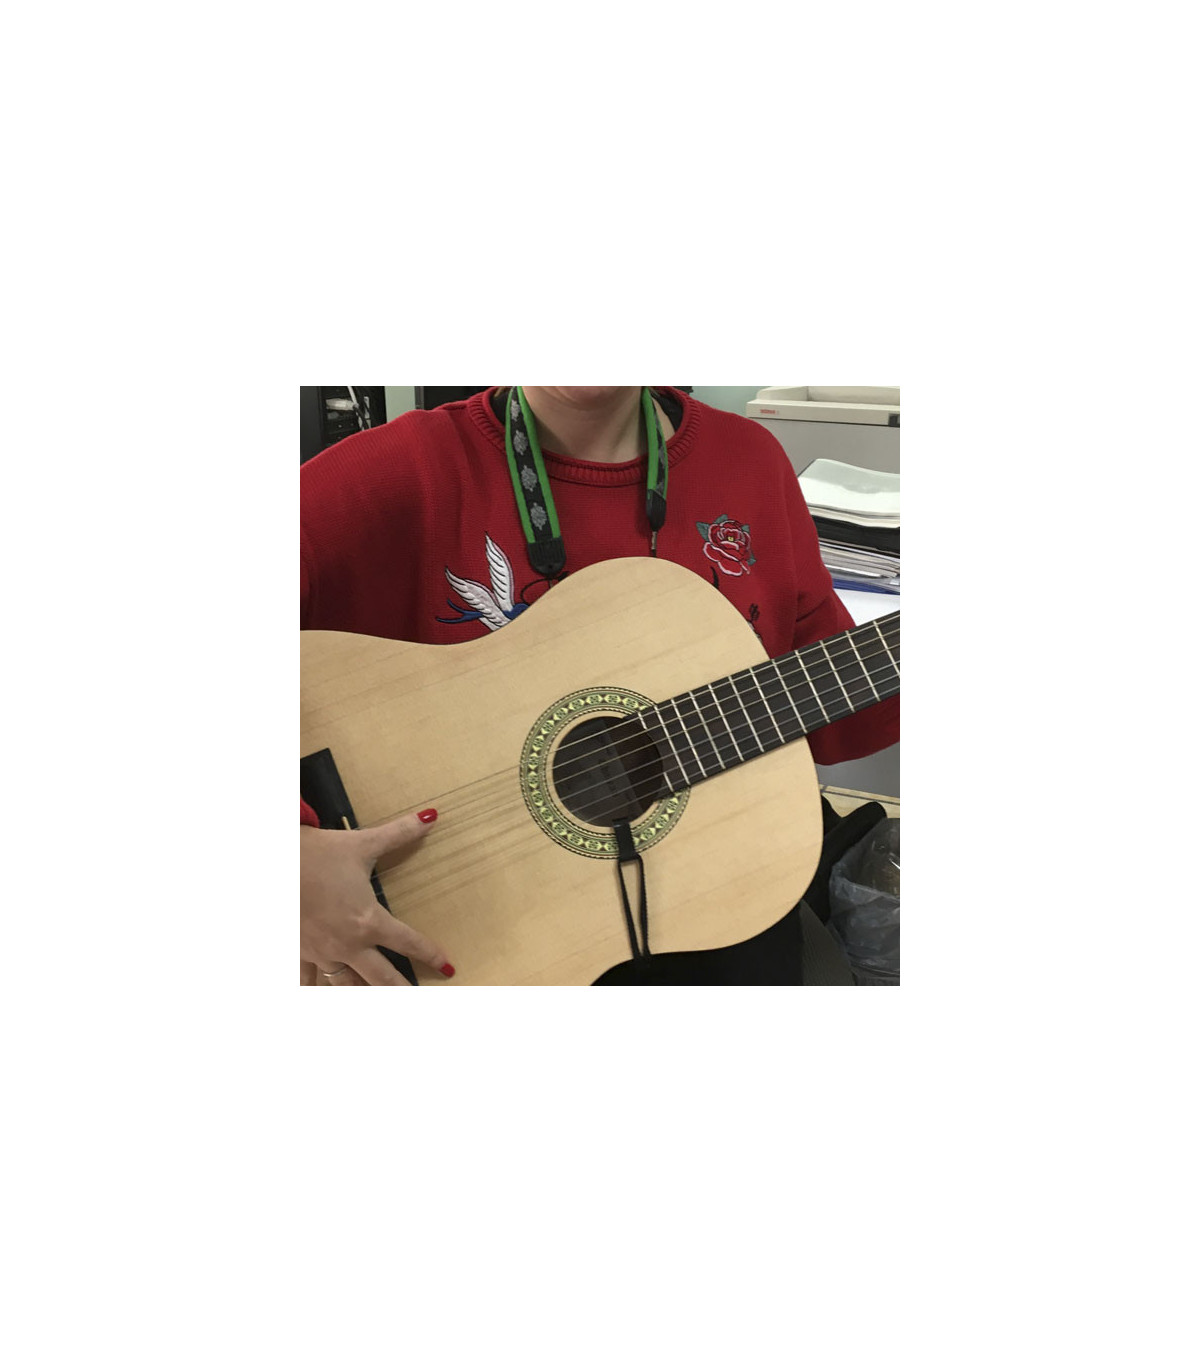 Ortola Correa Guitarra Clasica Numero 3 Verde, comprar online